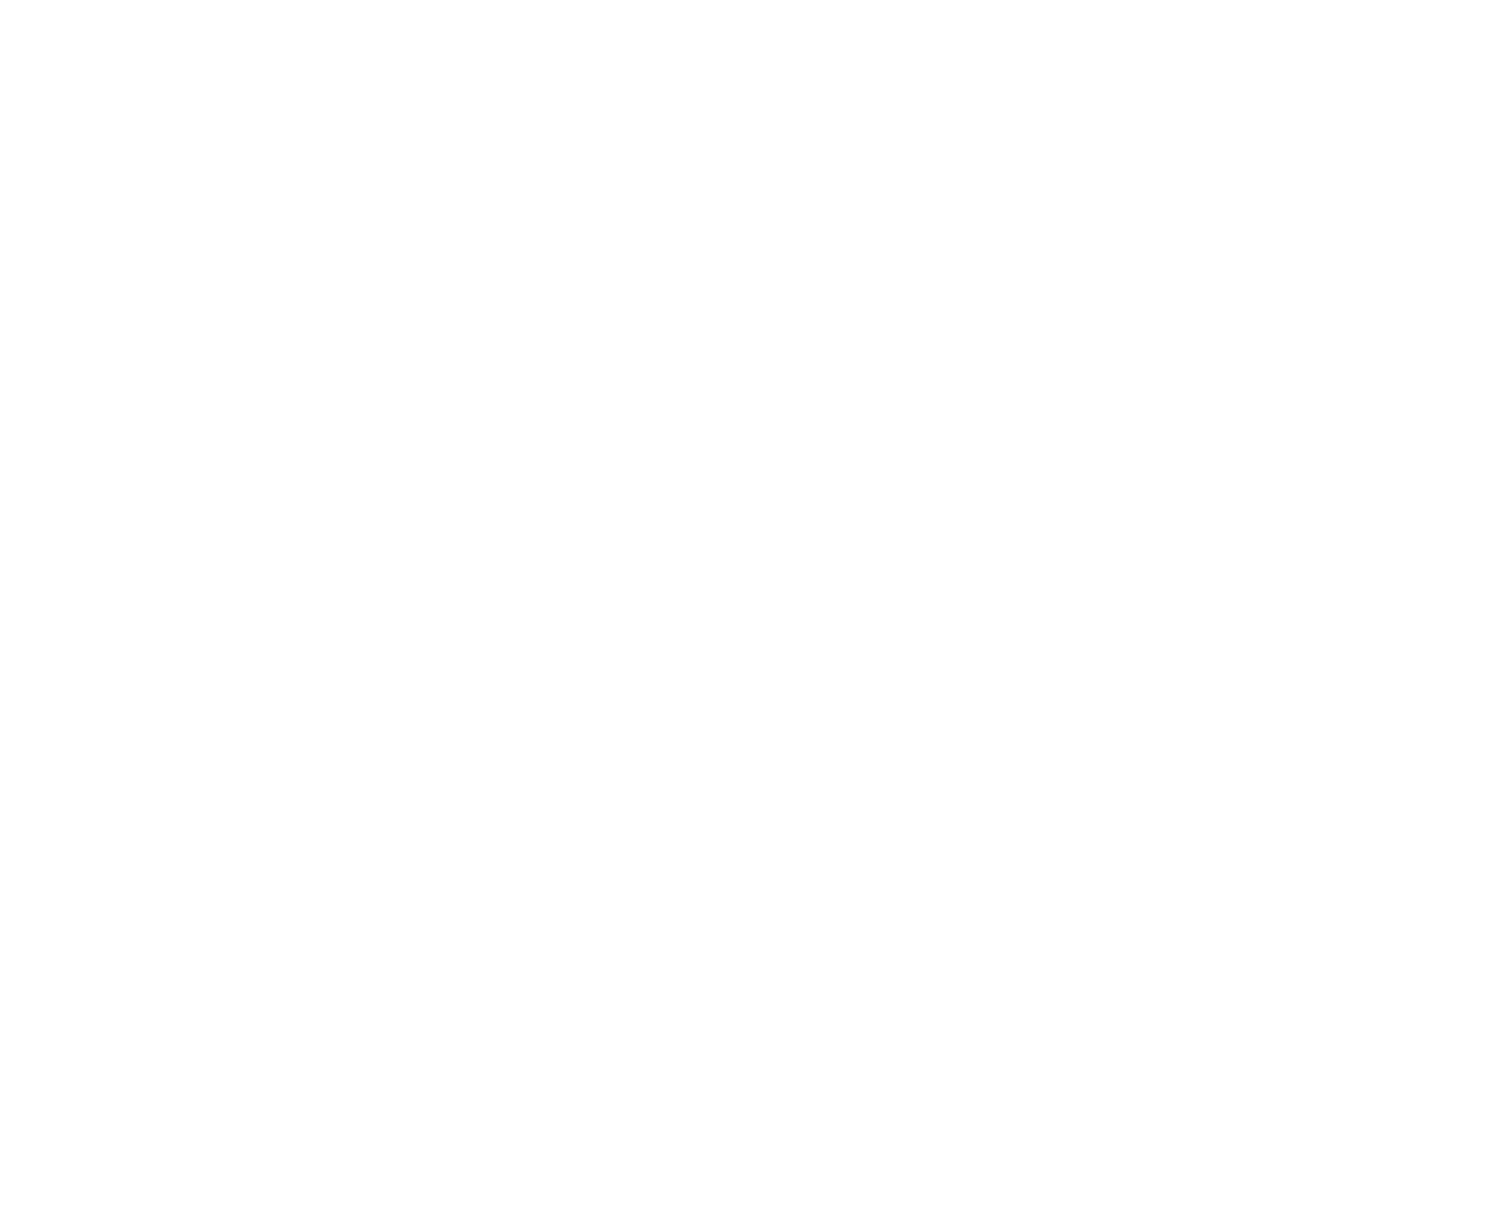 The Printing Korner